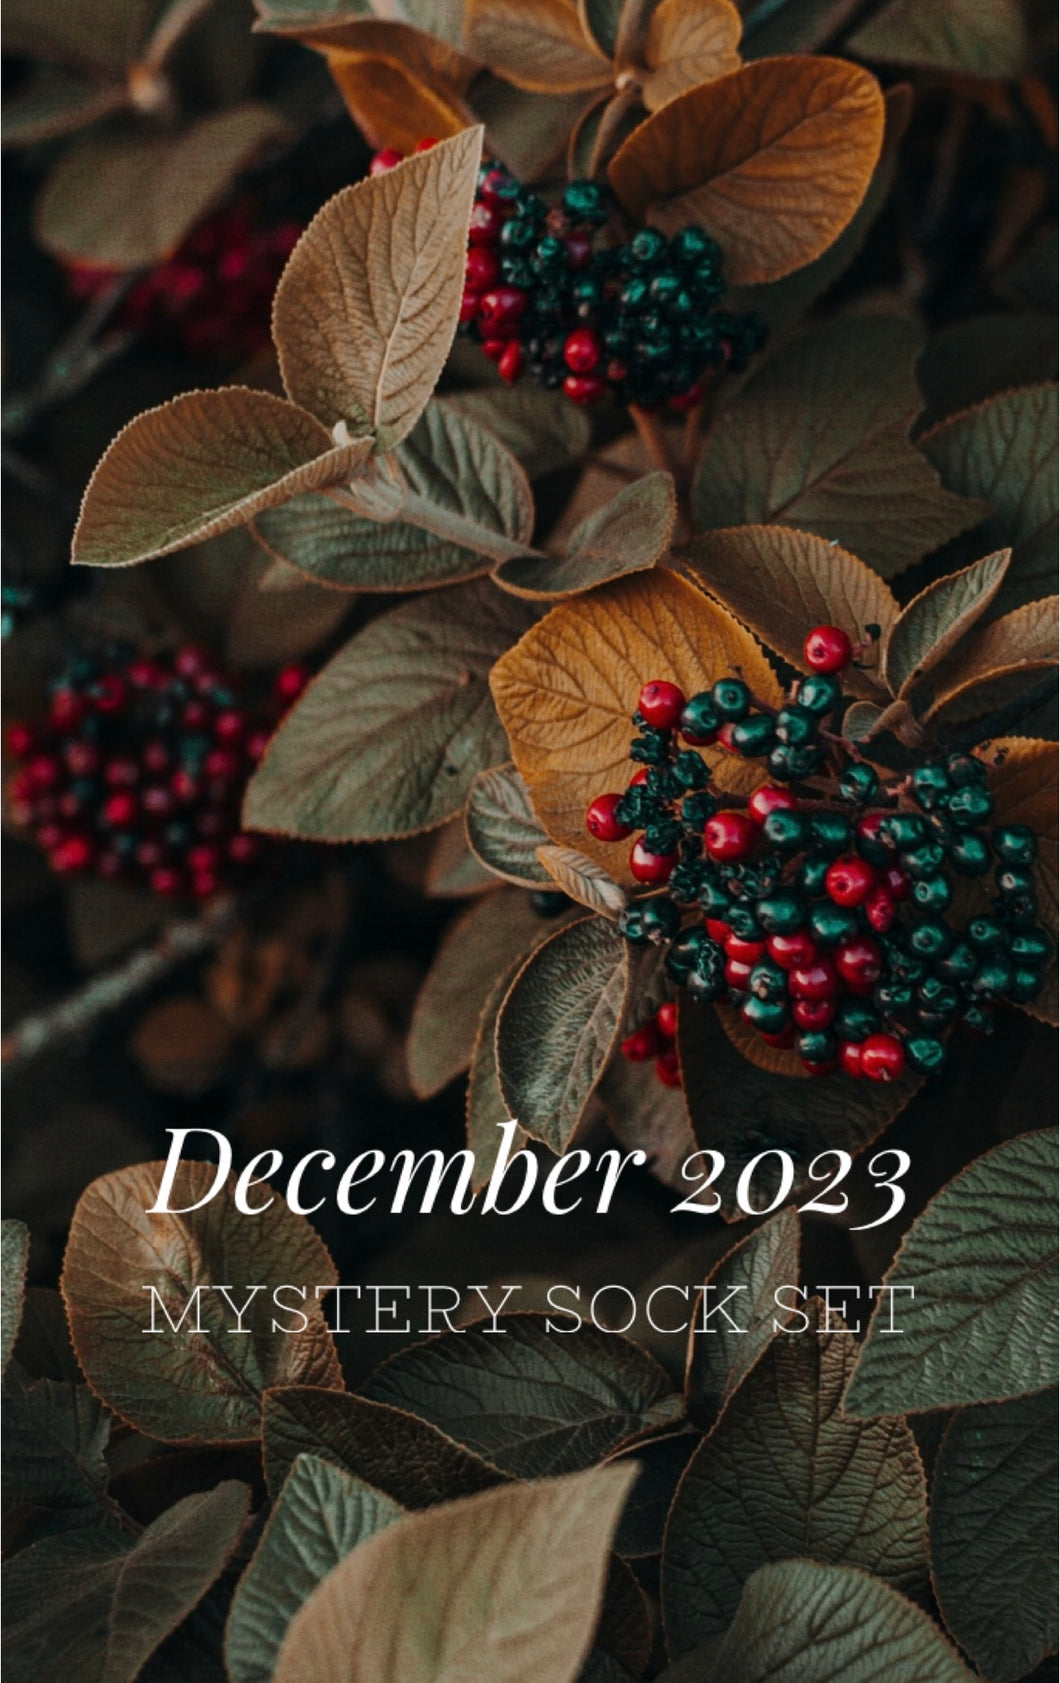 December ‘23 Mystery Sock Set PRE-ORDER